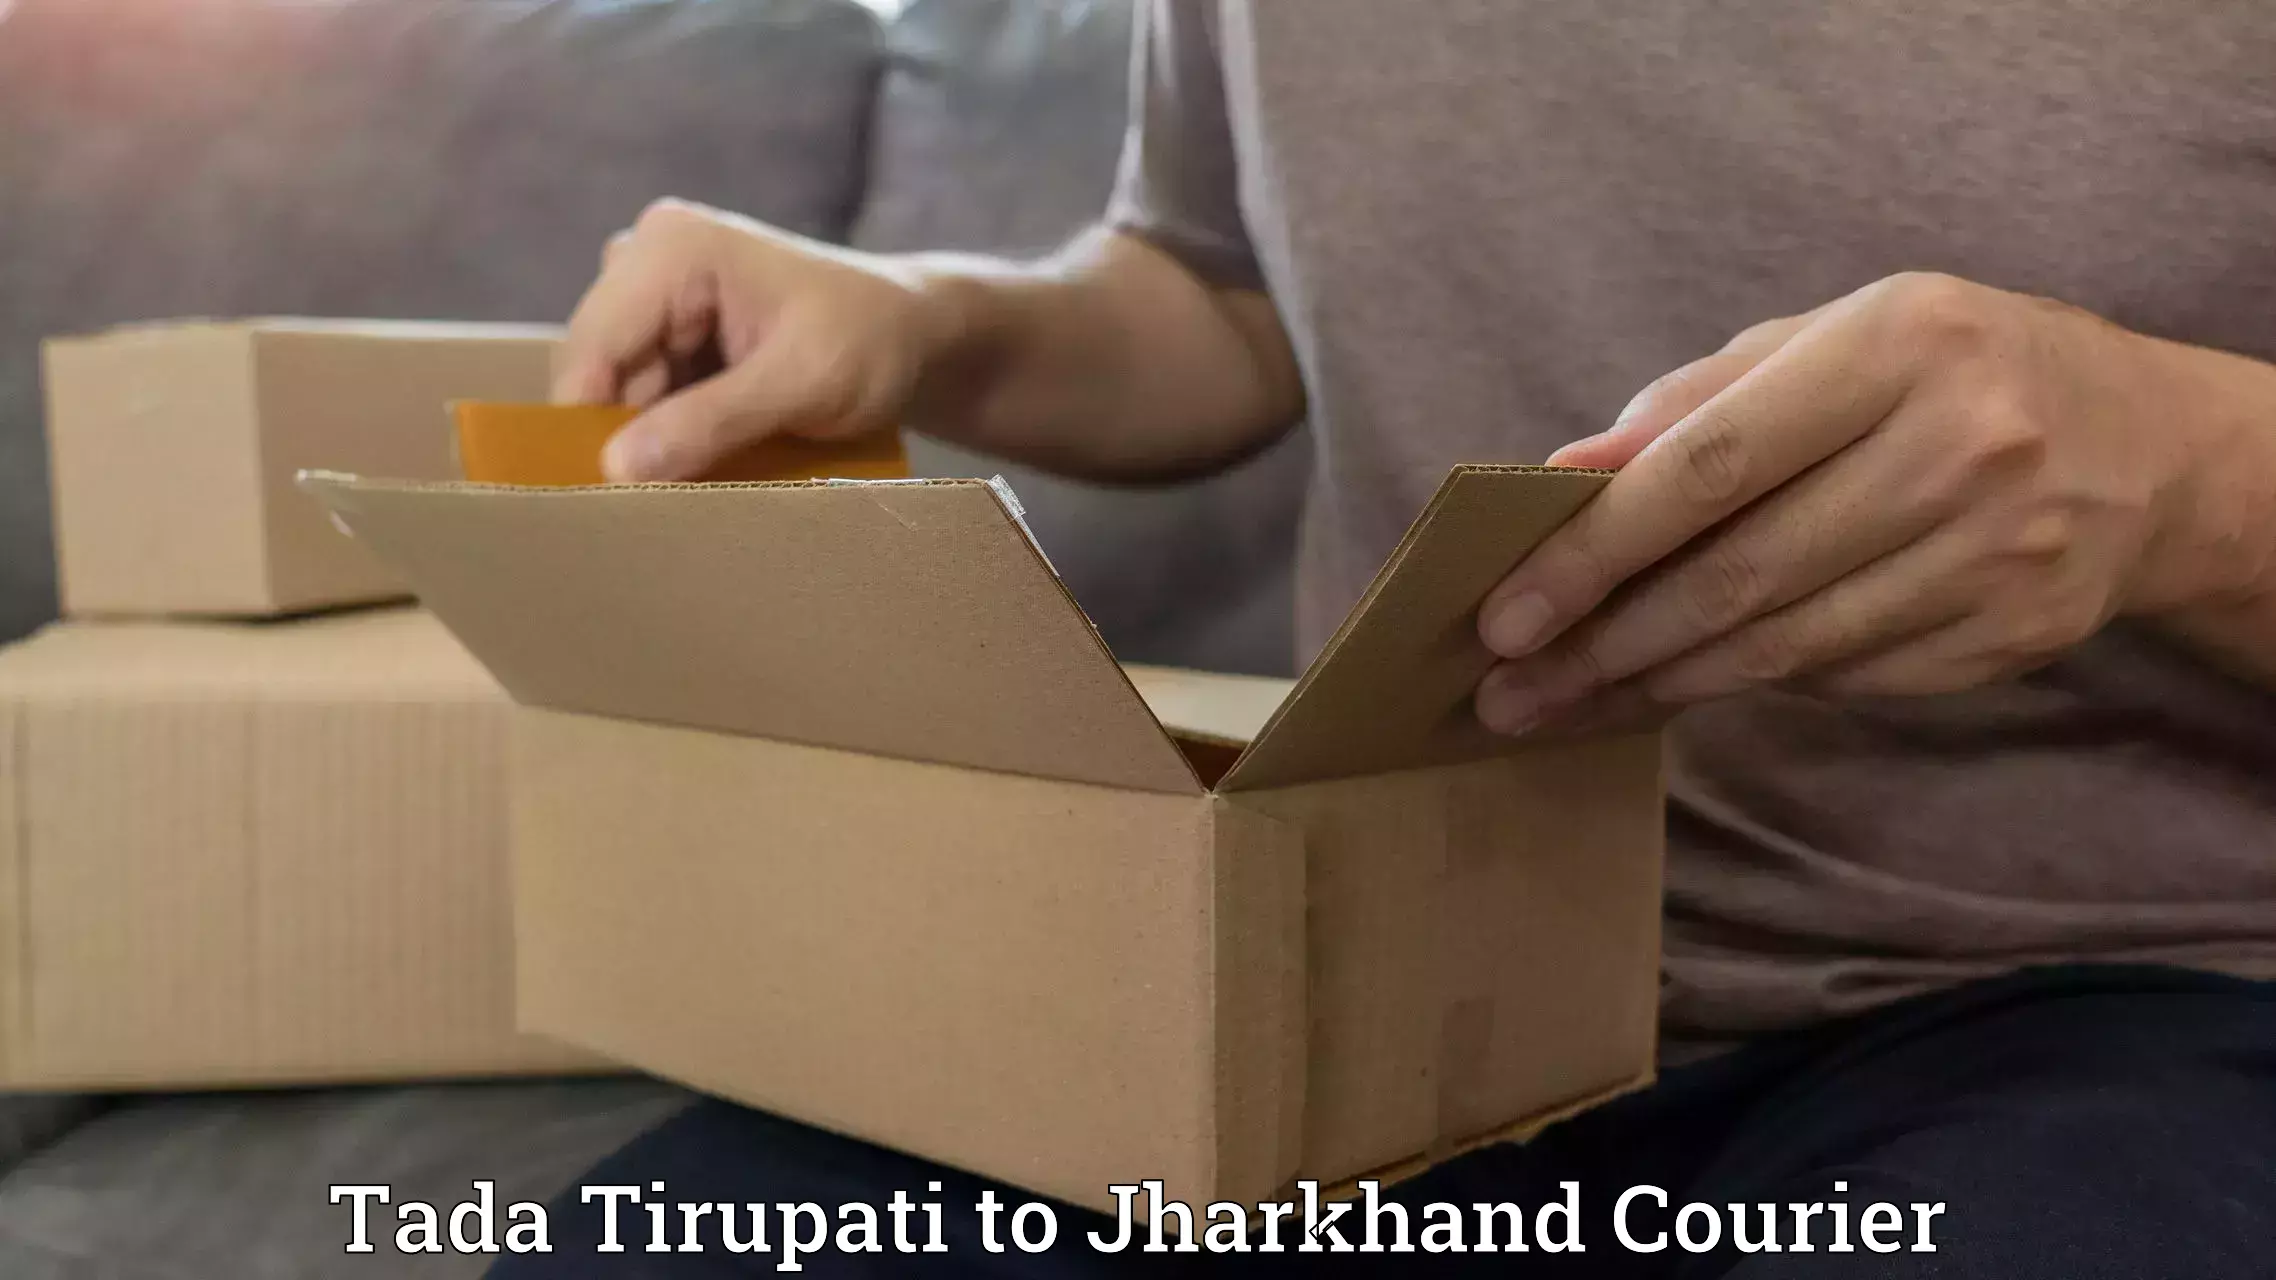 Business delivery service Tada Tirupati to Kedla